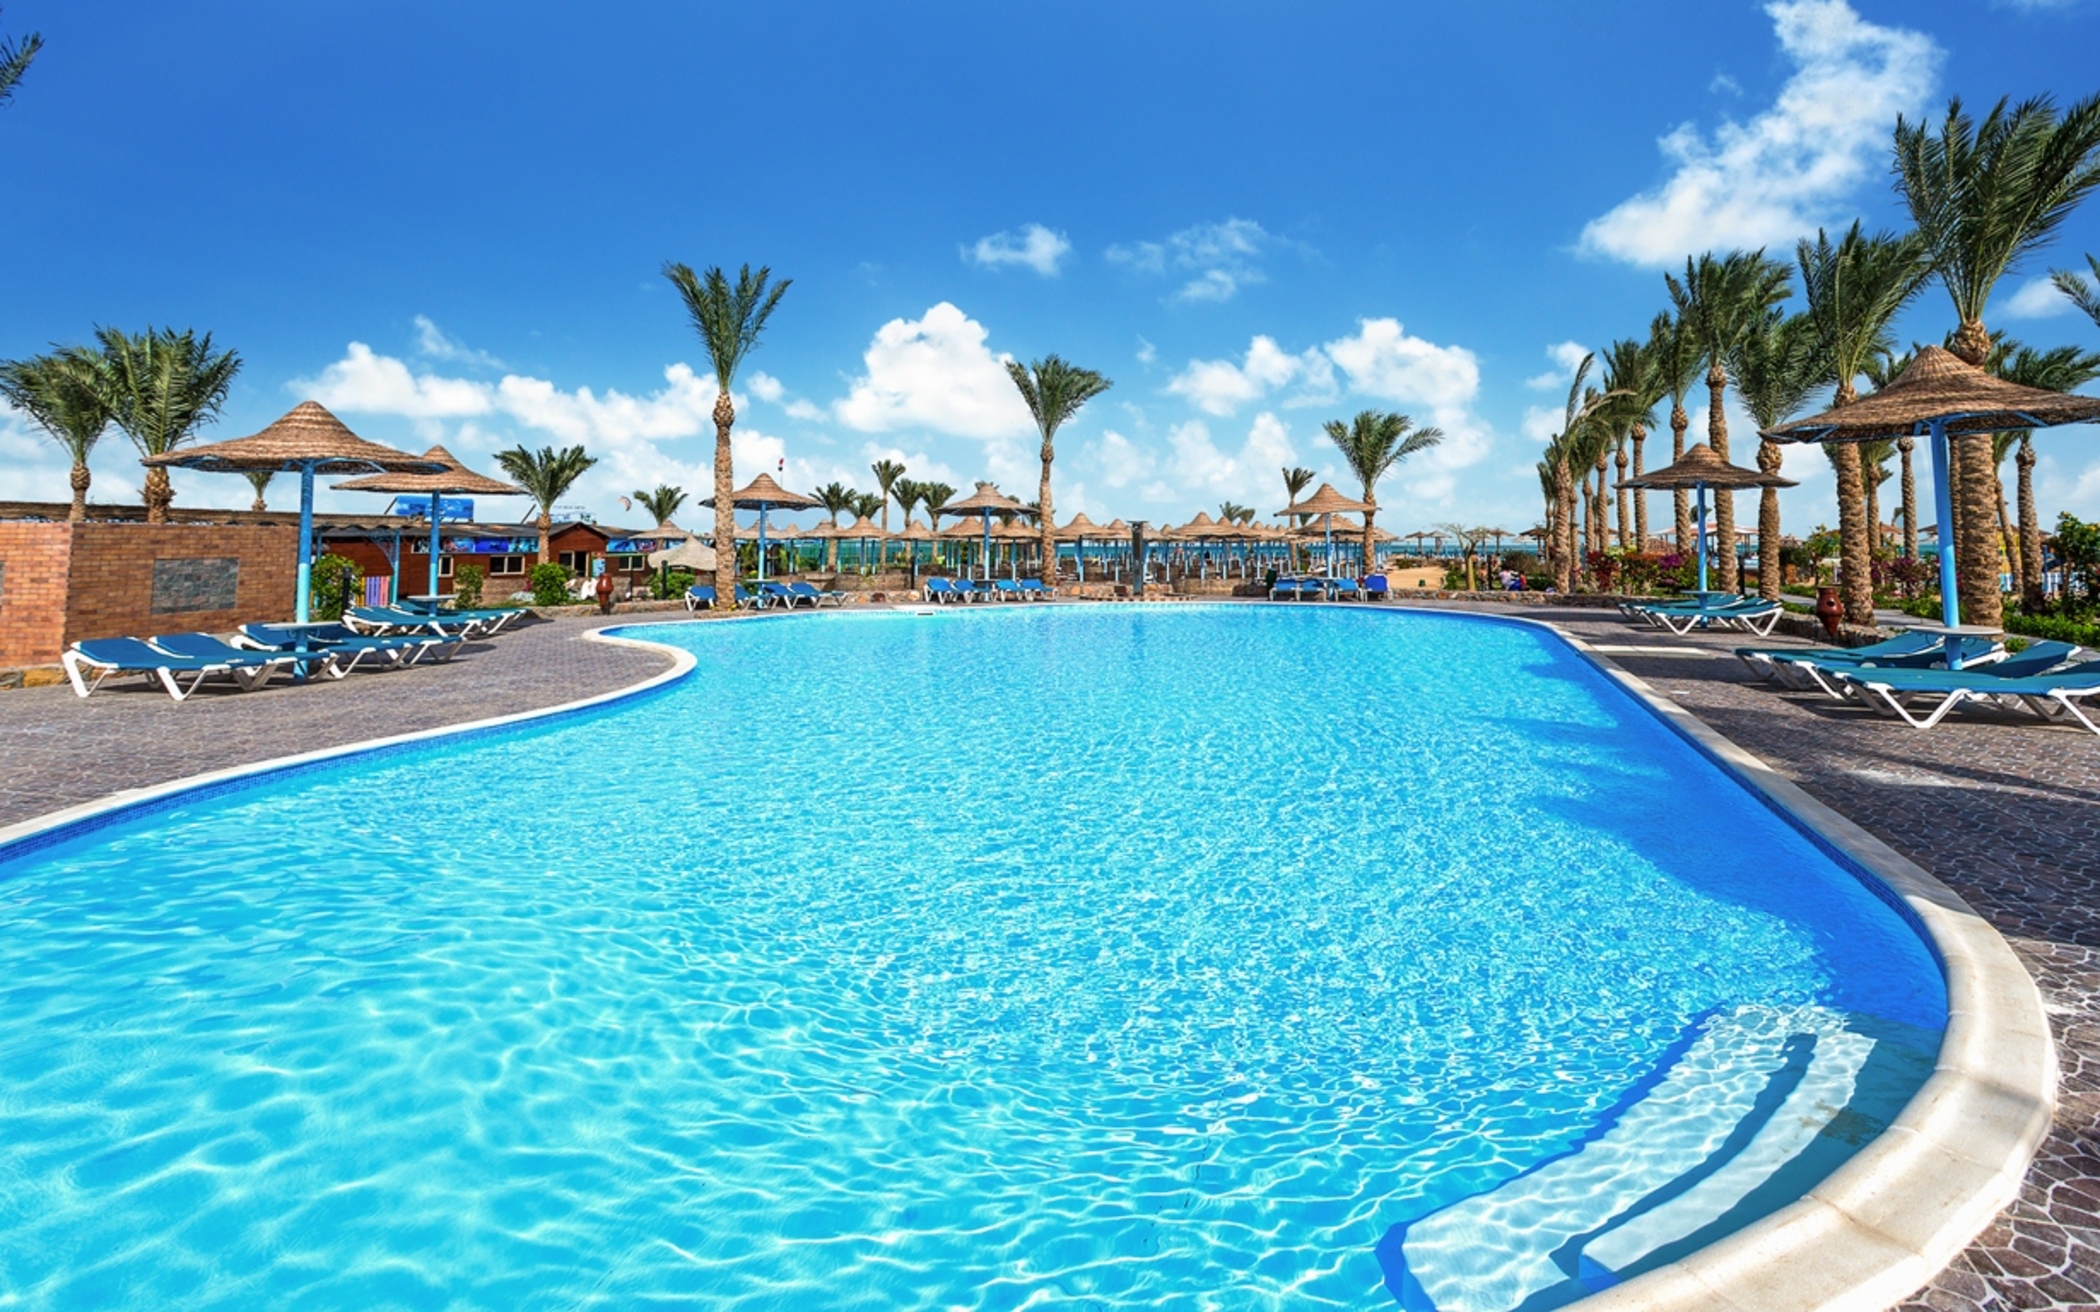 Hawaii Le Jardin Aqua Park Resort Hurghada, Hurghada, Egypt